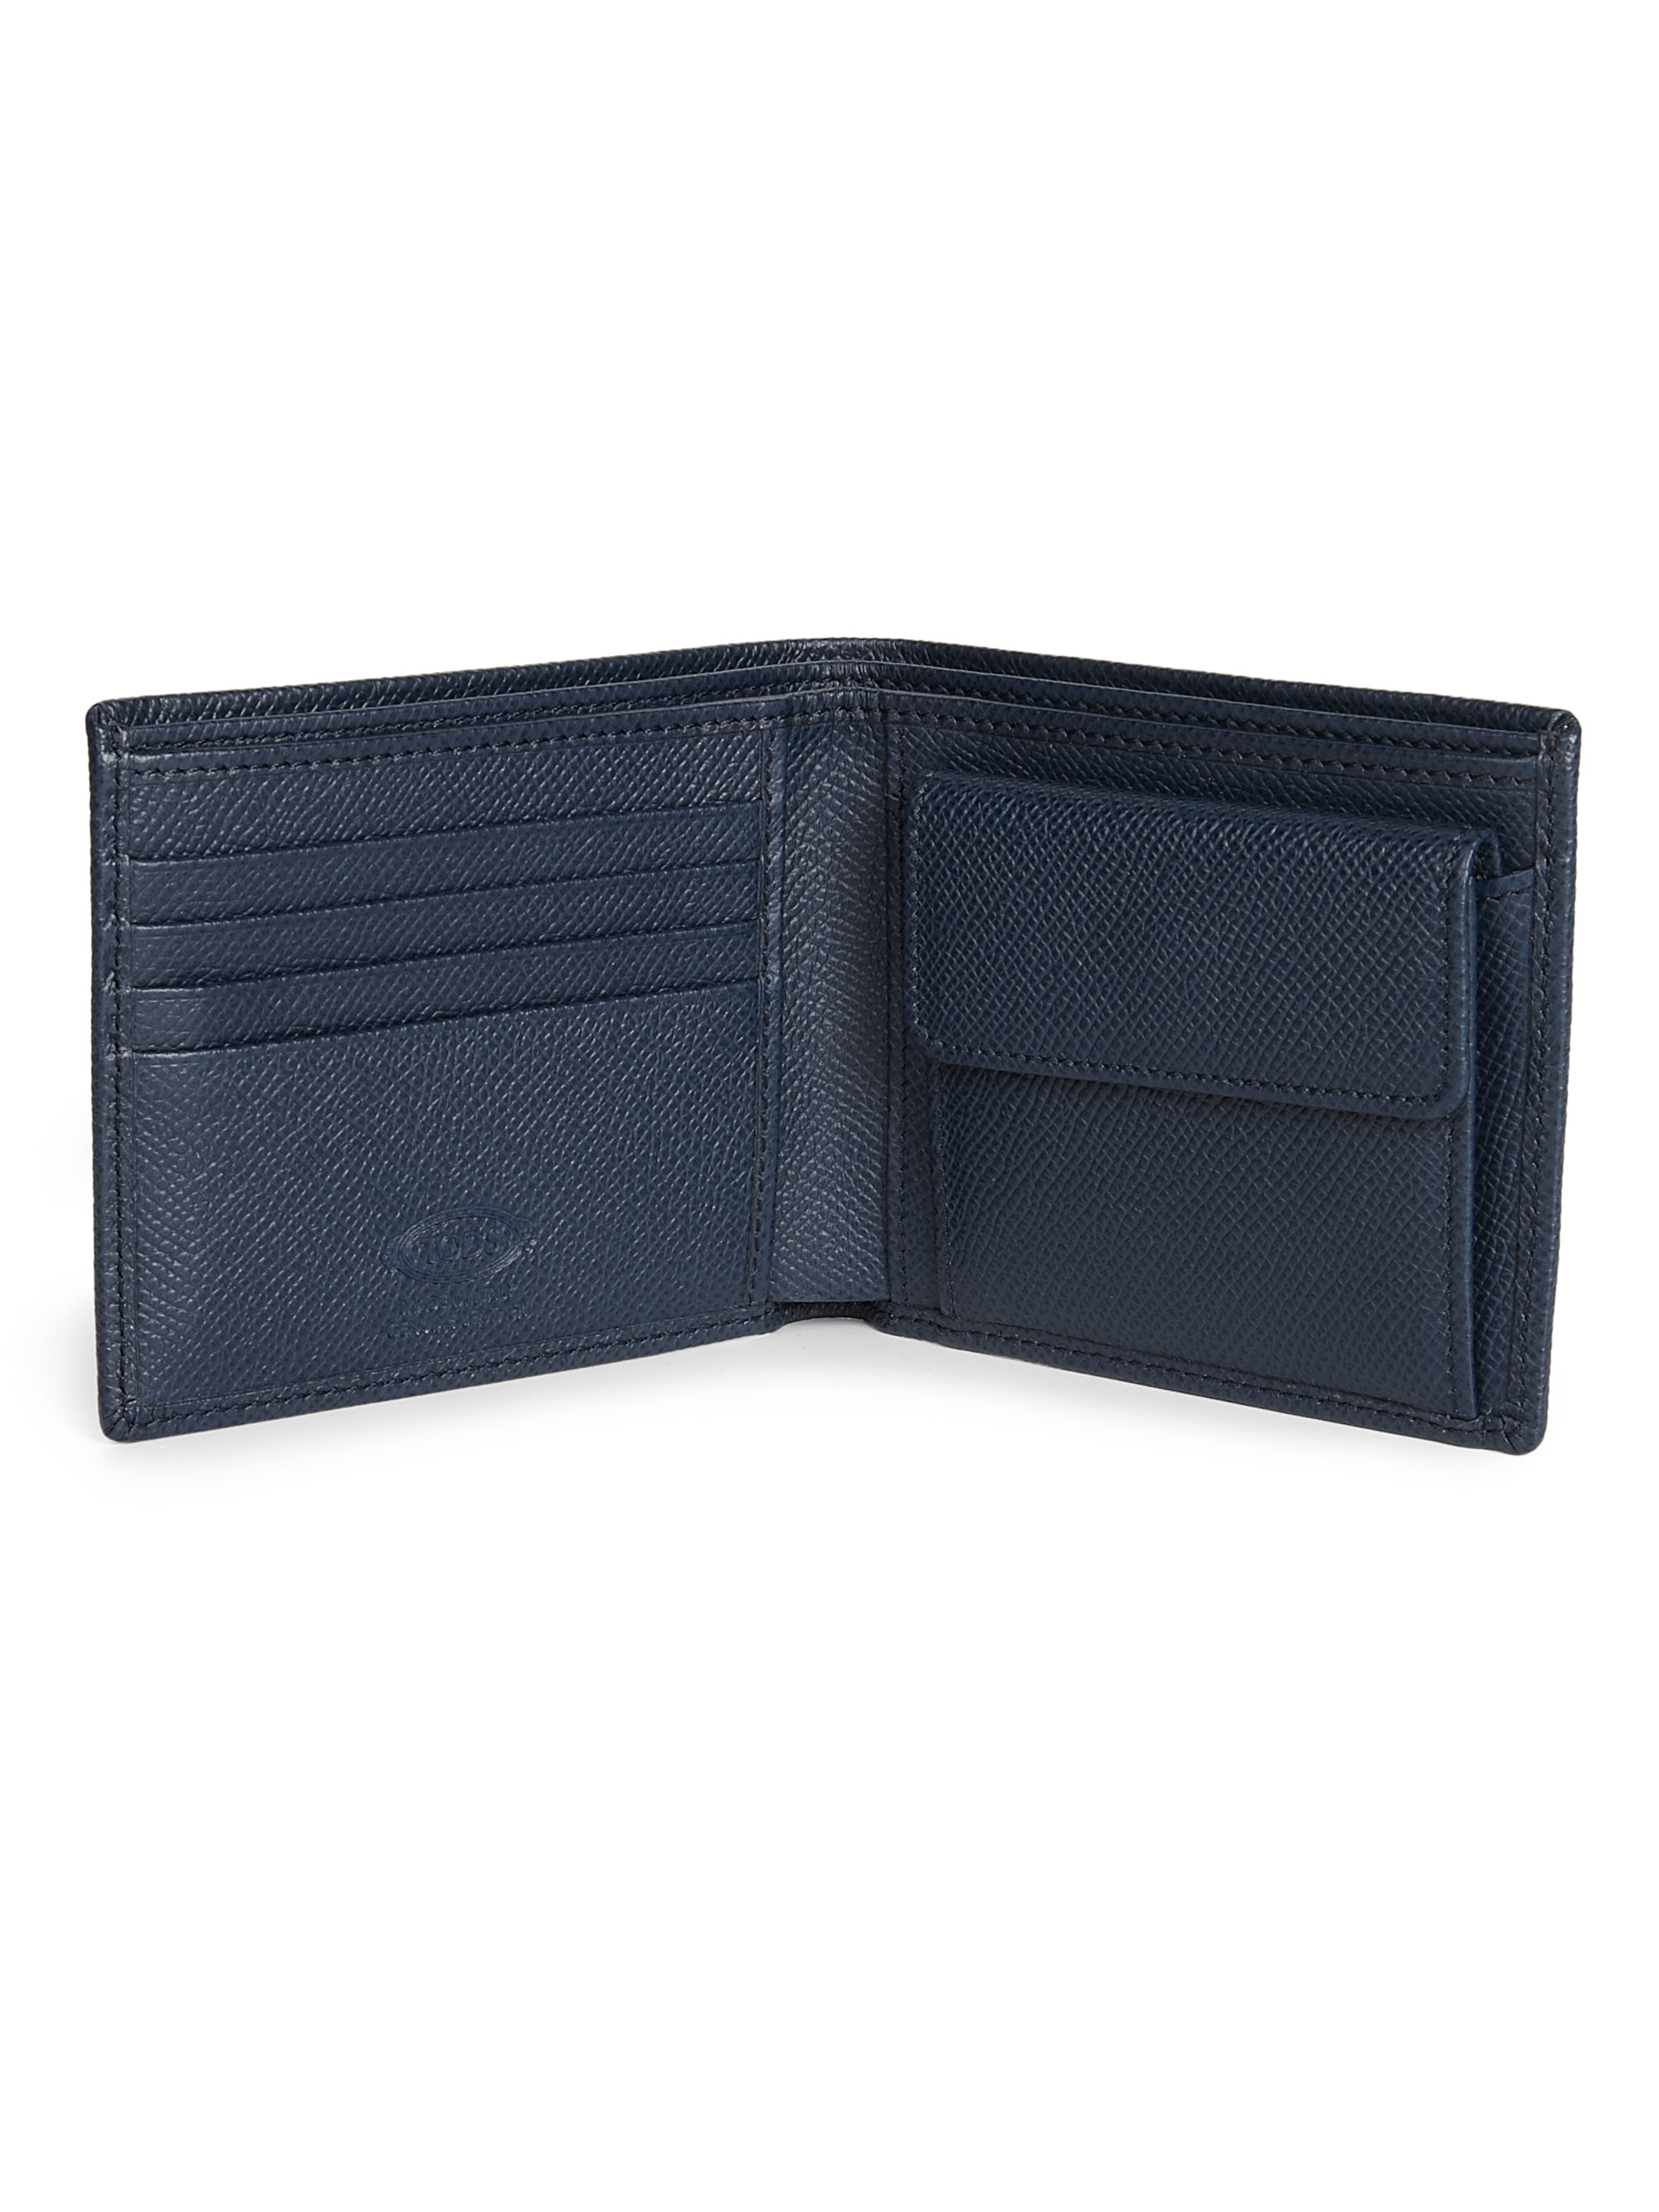 Lyst - Tod'S Leather Billfold Wallet in Blue for Men